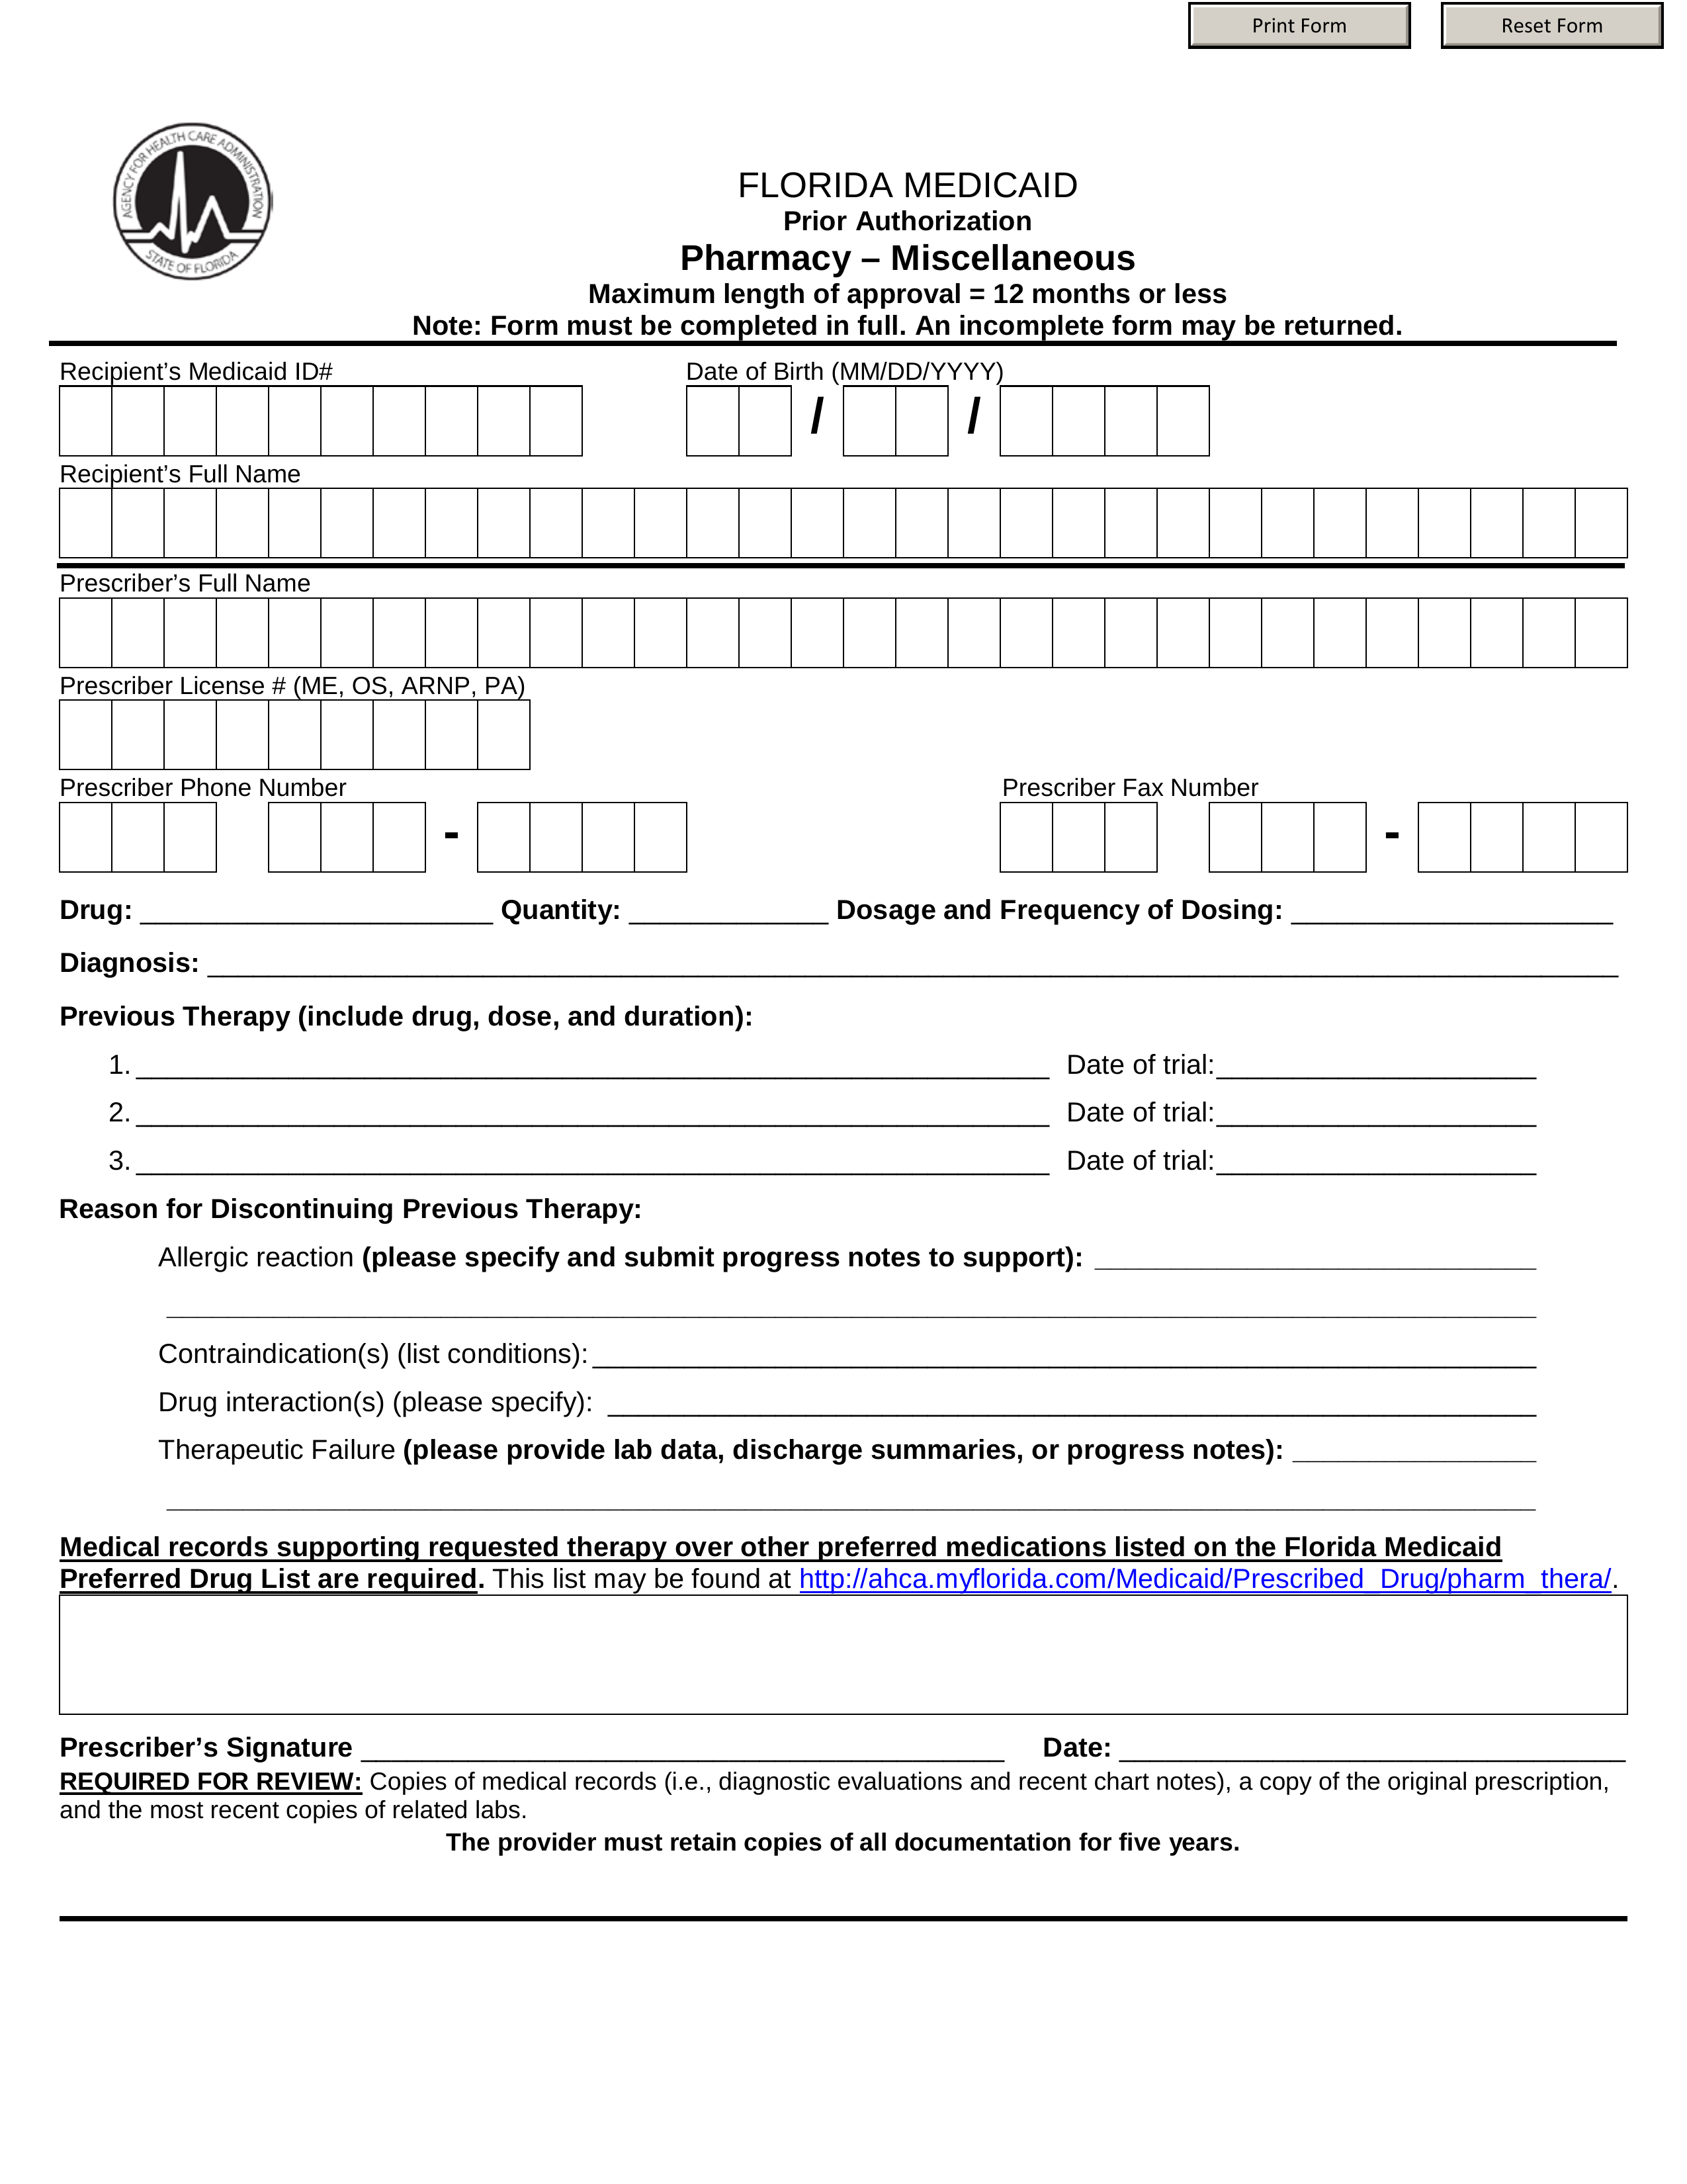 Florida Medicaid Prior (Rx) Authorization Form